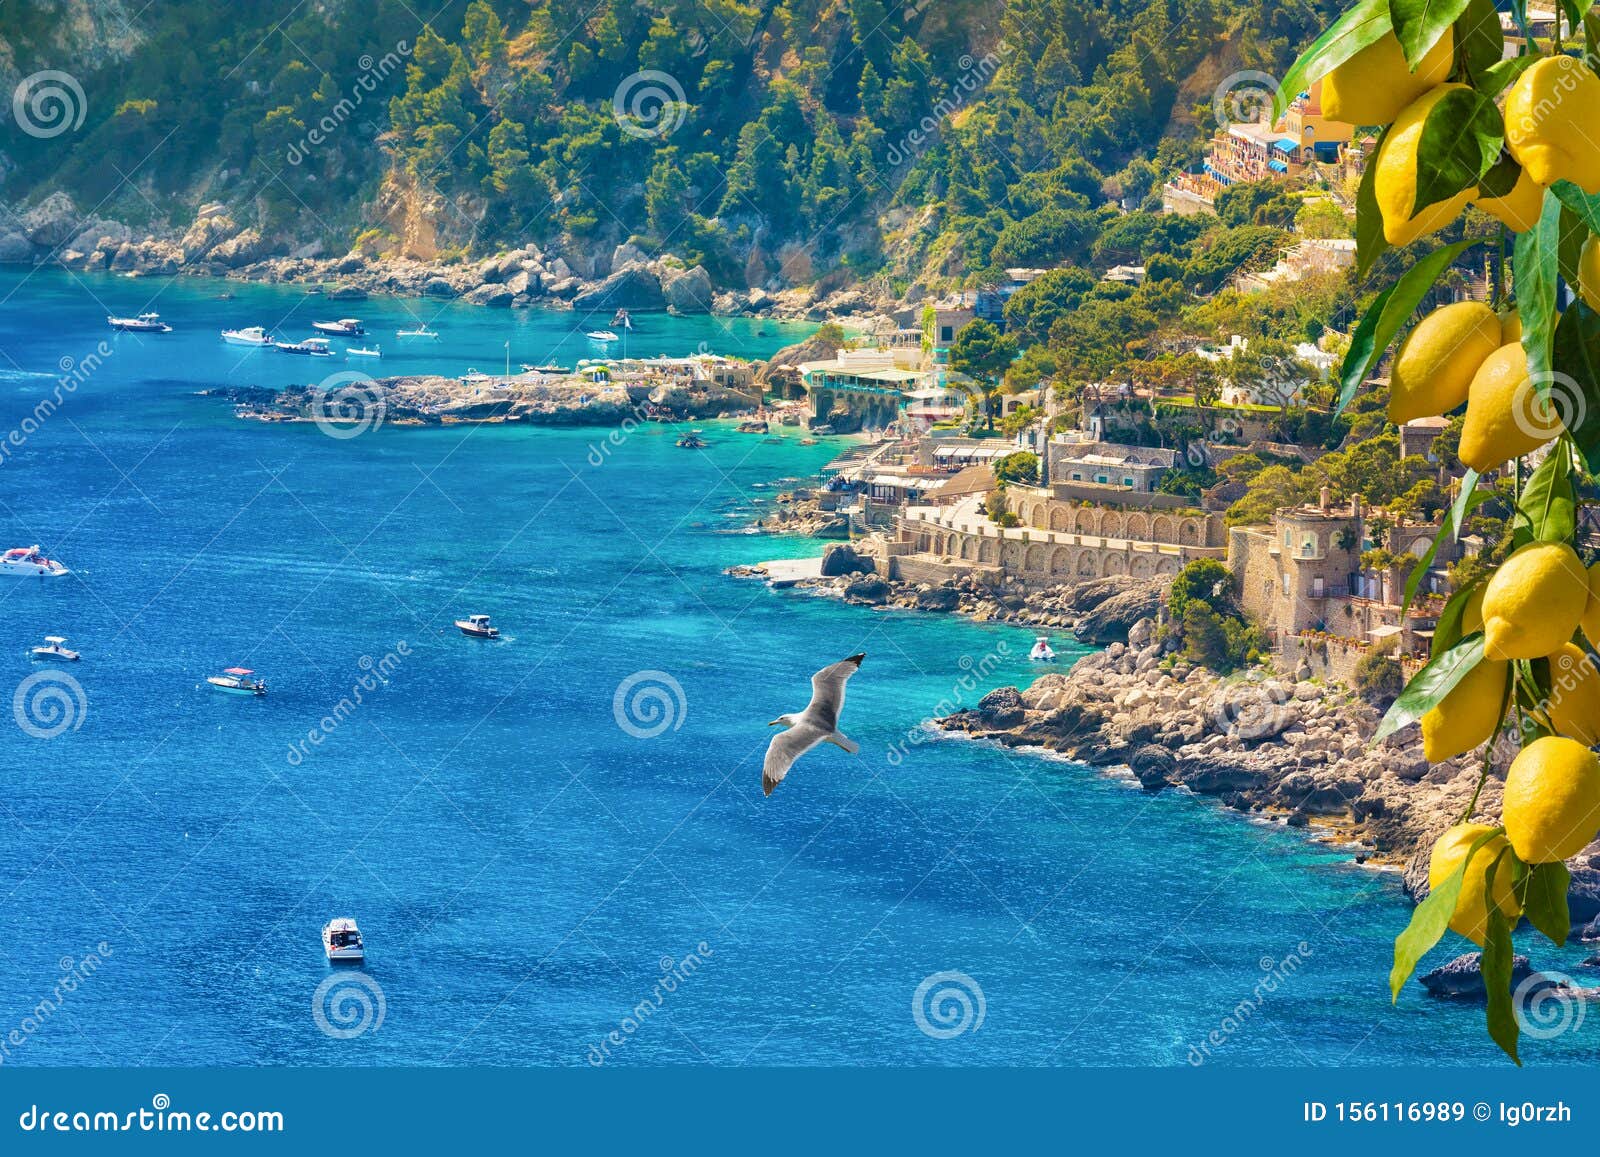 beautiful marina piccola with rocky shore and clear blue sea, capri island, italy